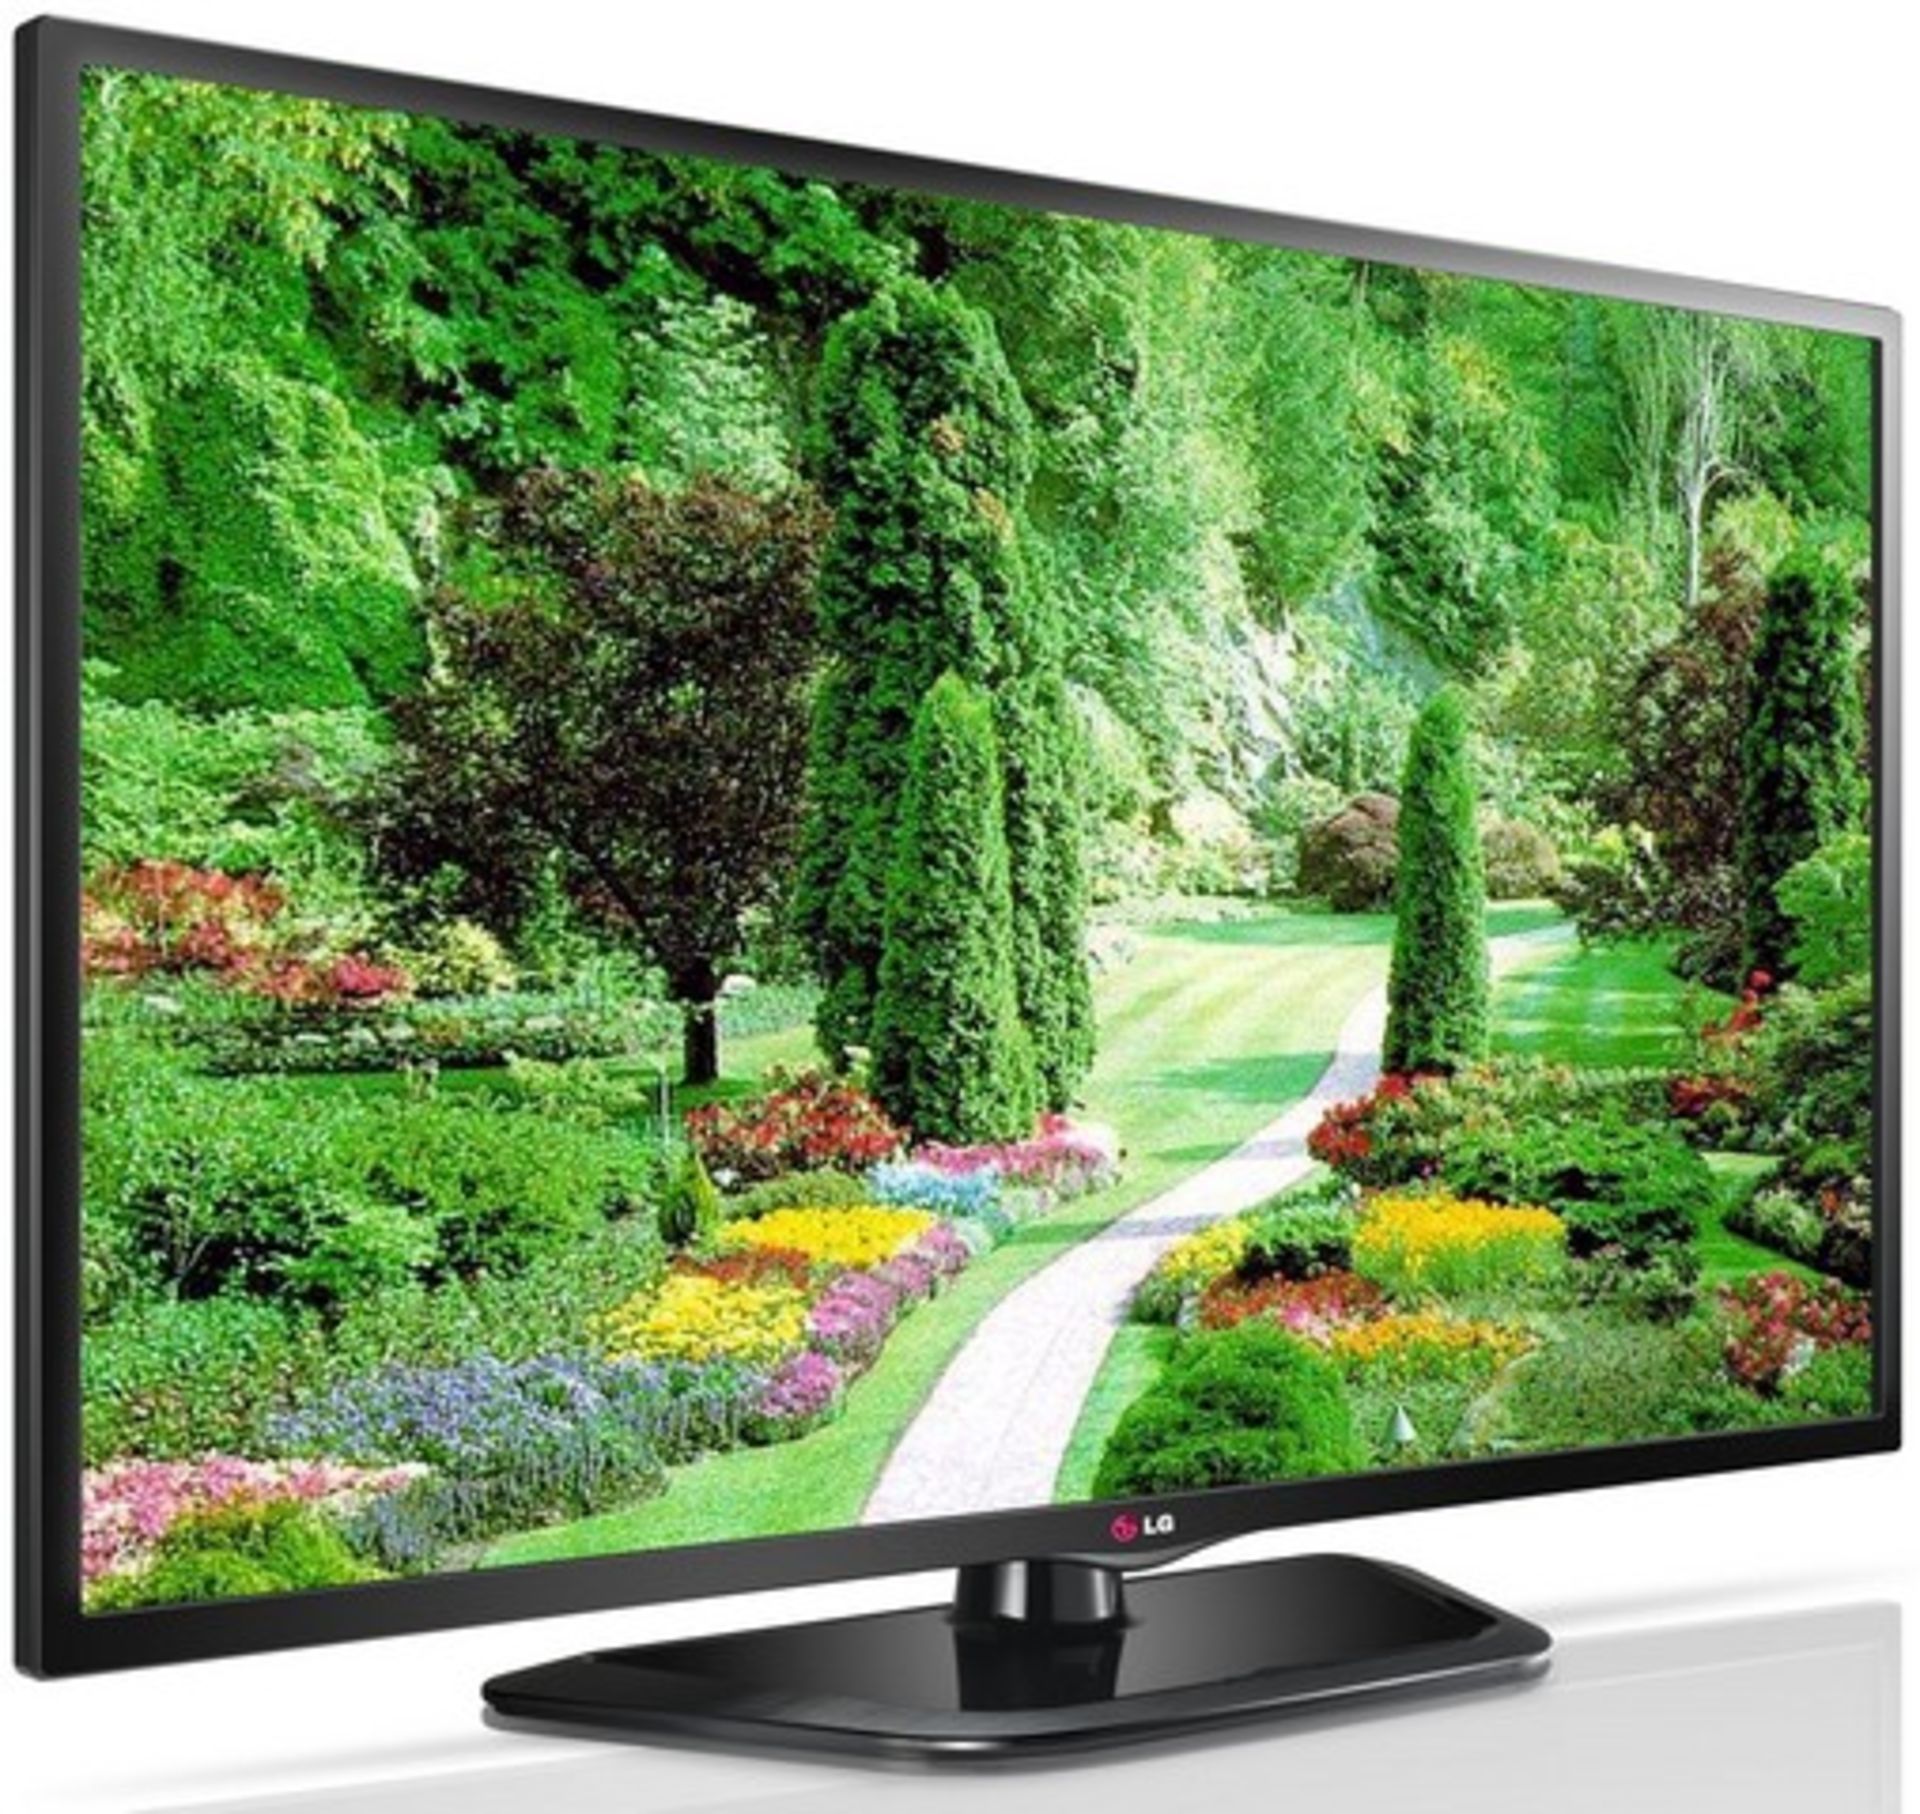 + VAT Grade A LG 47LN5400 47" LED Full HD TV - Freeview - Smart Share - 1 x USB 2.0 - 2 x HDMI